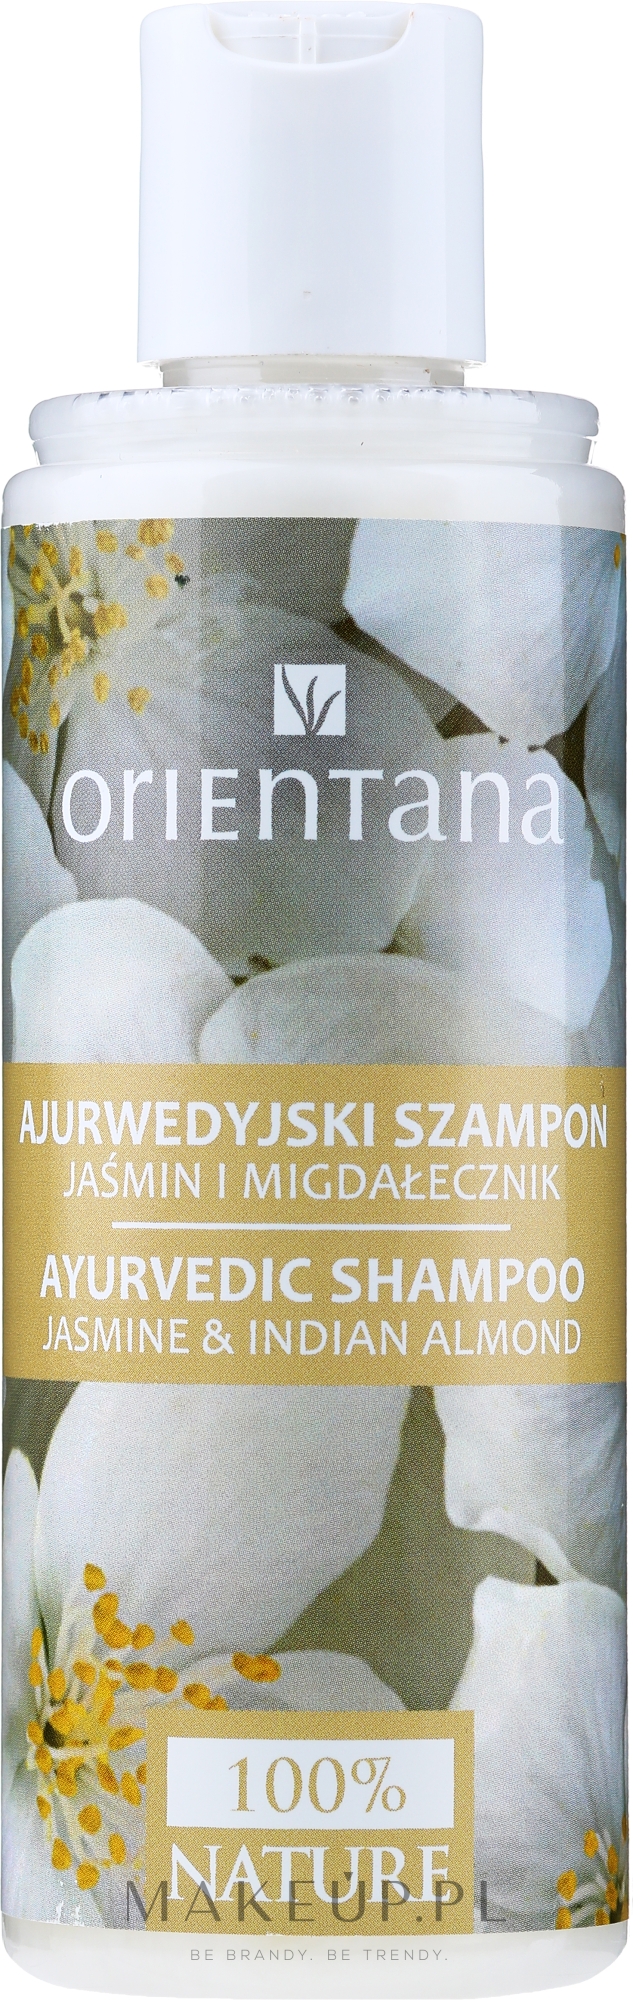 orientana szampon hebe